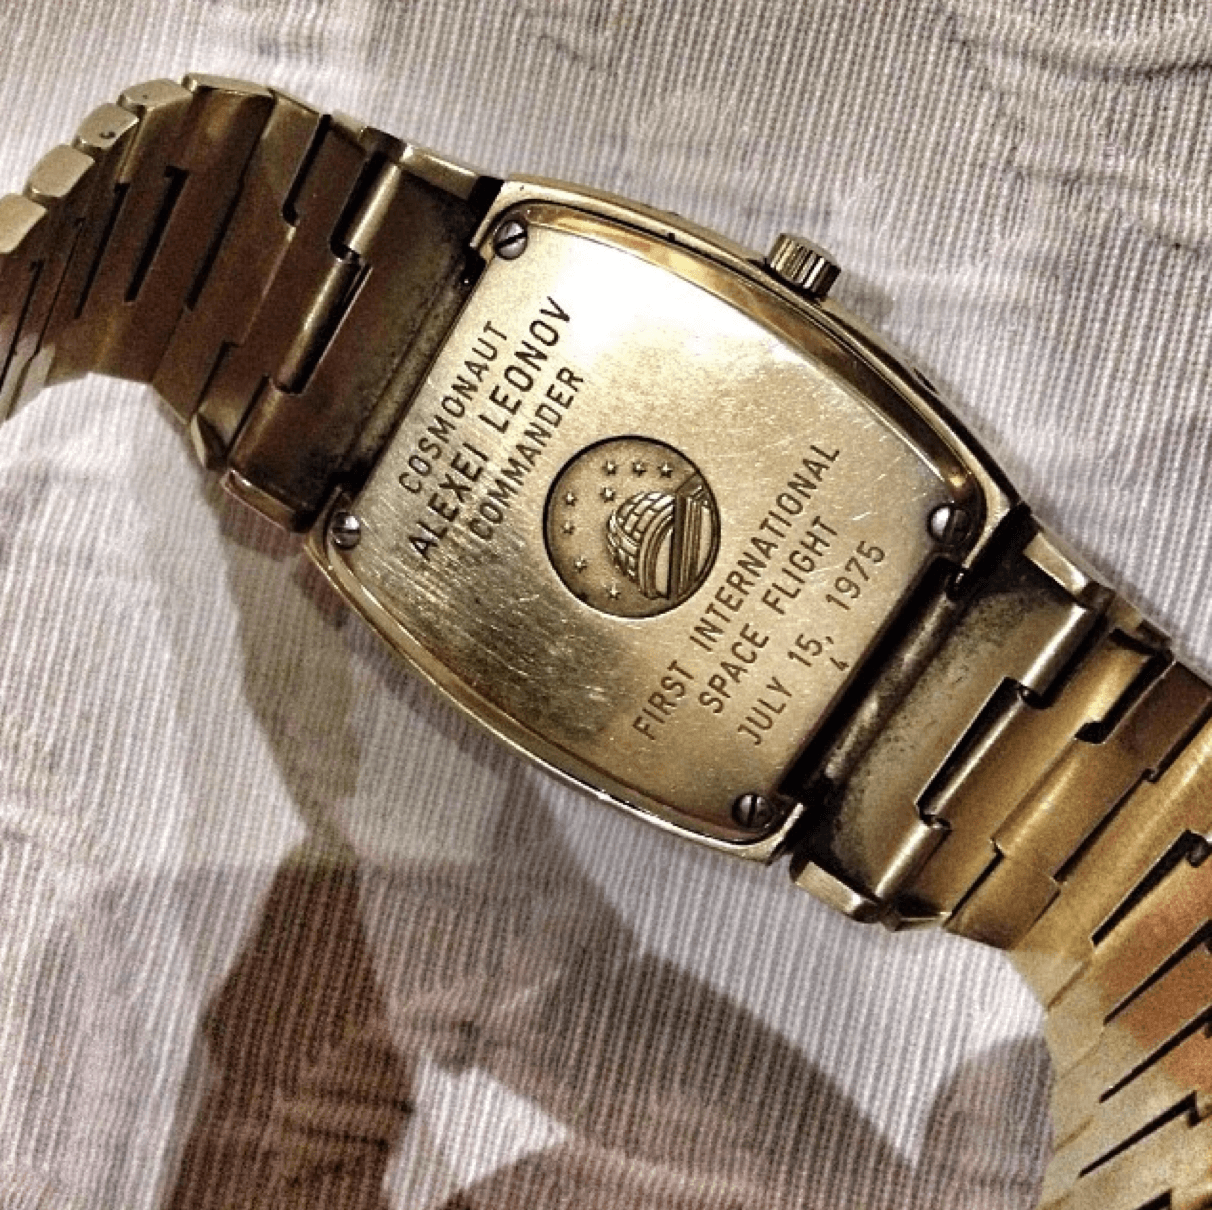 Cosmonaut Alexei Leonov's watch photographed by Ben Clymer / Hodinkee